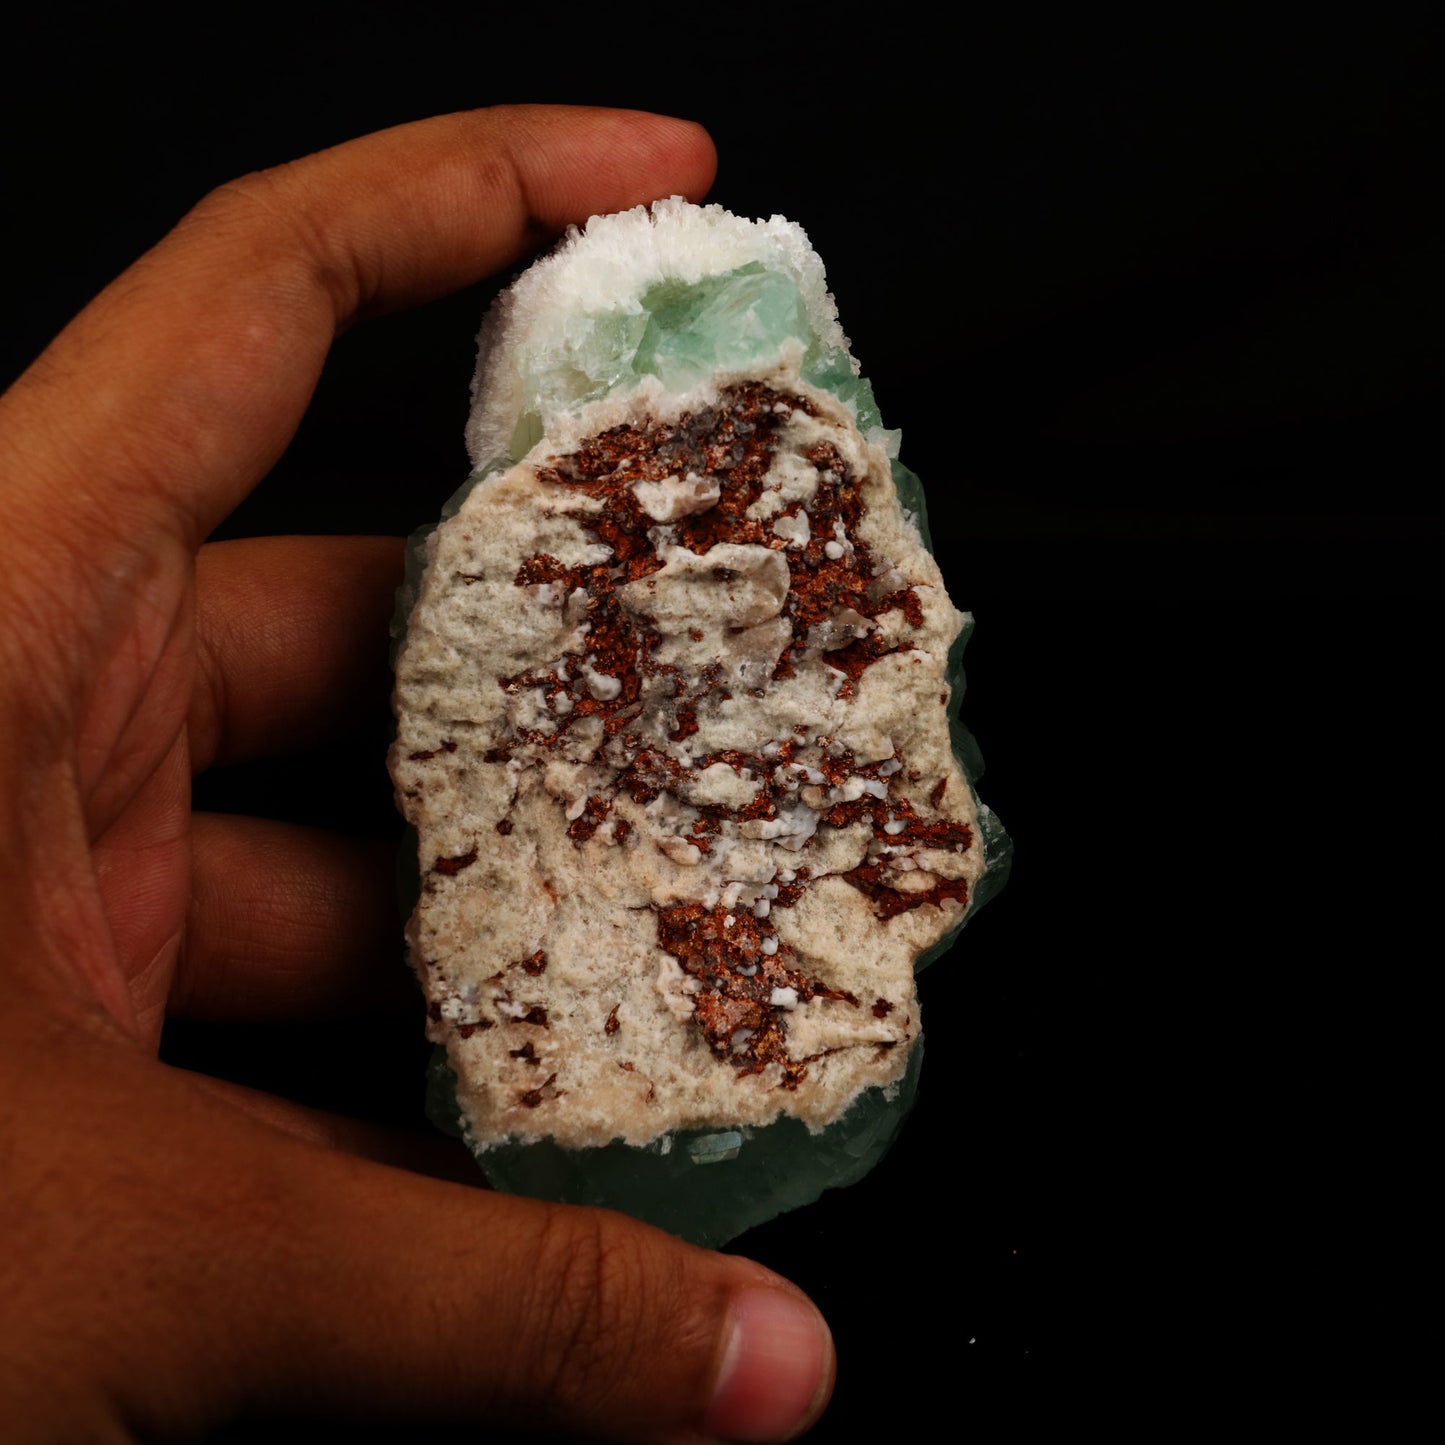 Apophyllite Green Cube with Mordenite Natural Mineral Specimen # B 5970 Apophyllite Superb Minerals 